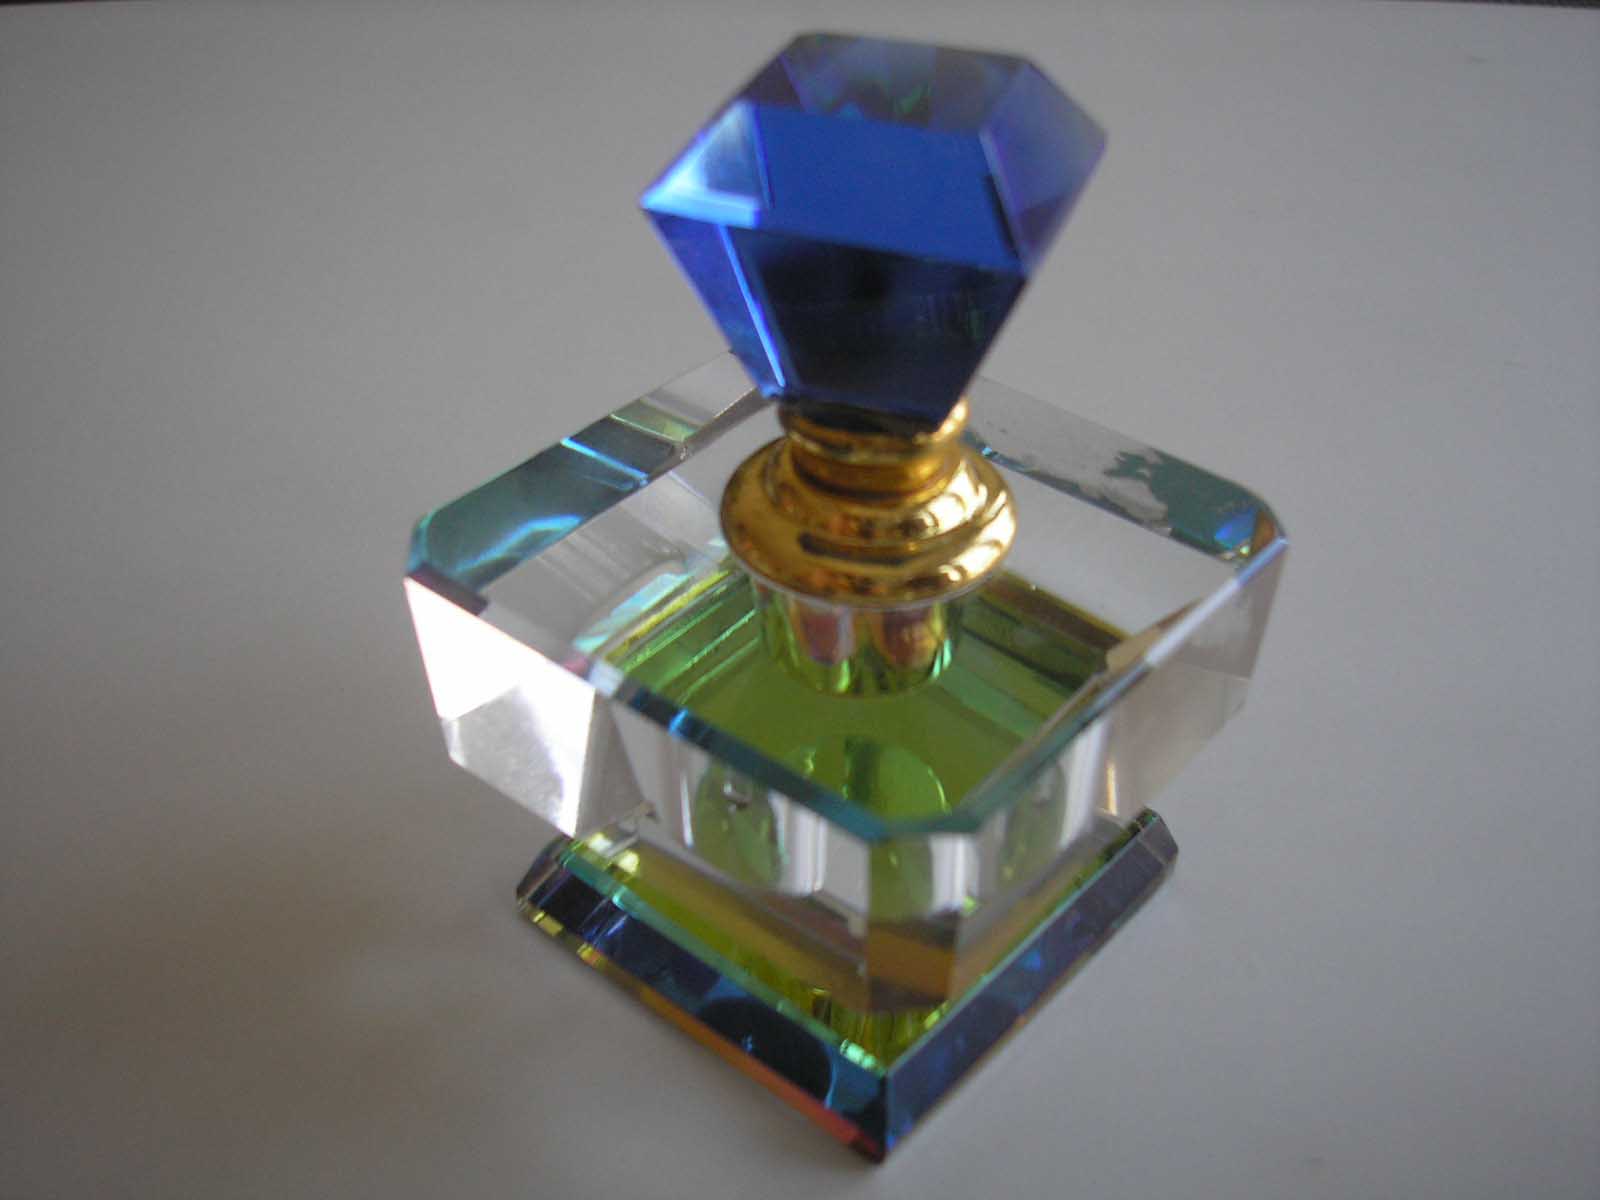  Perfume Bottle (Флакон духов)